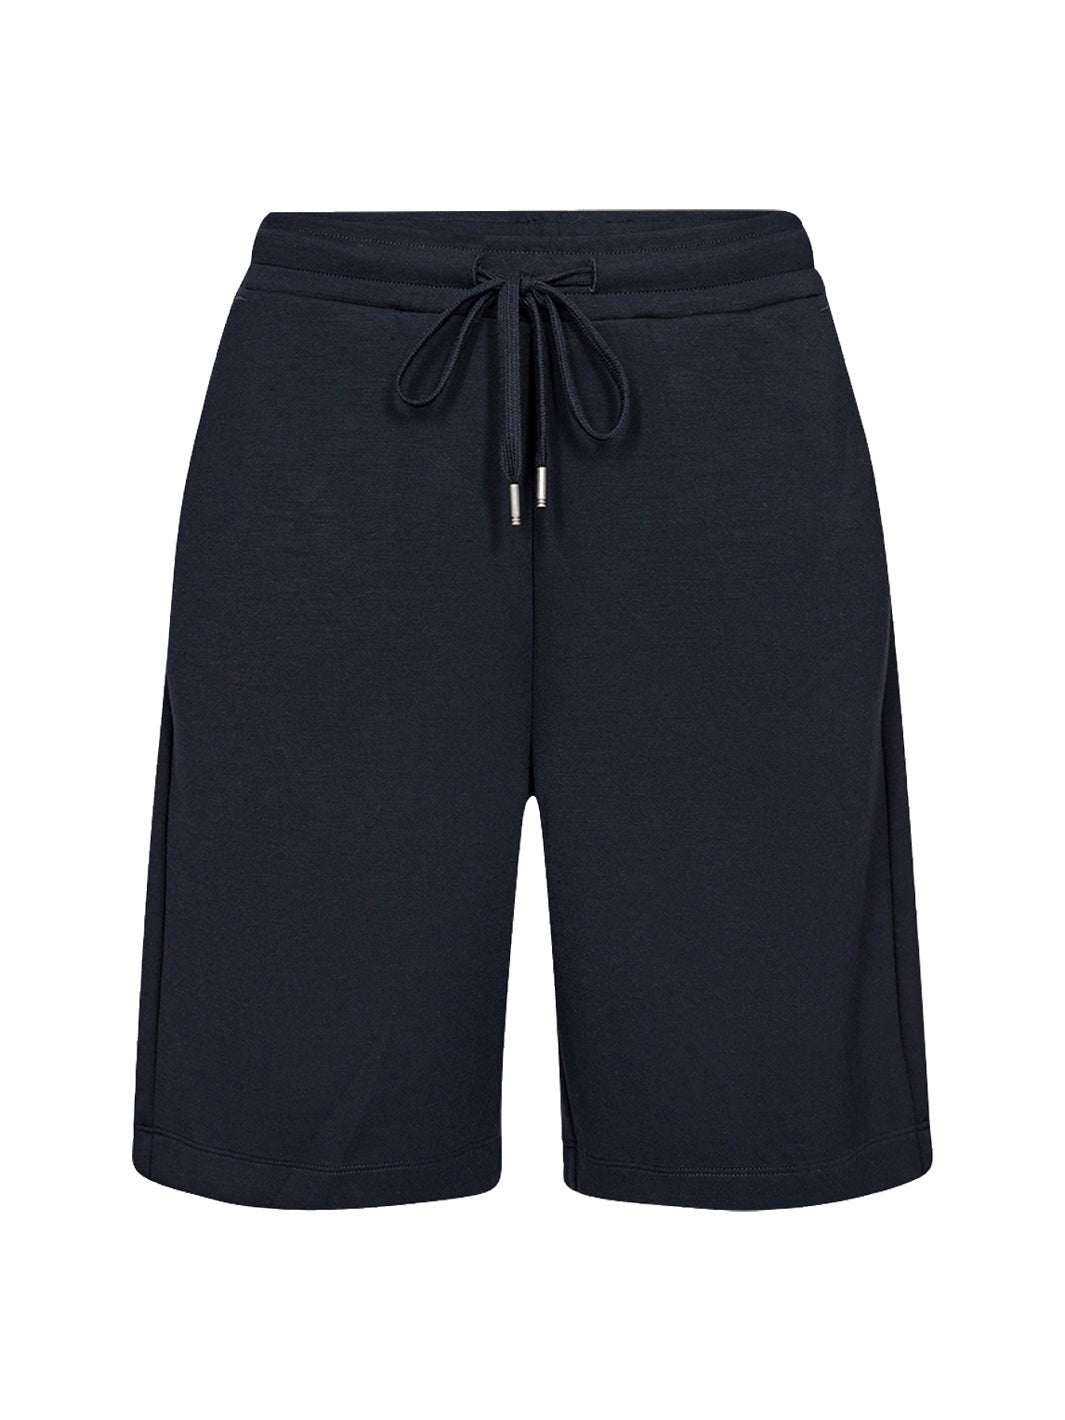 Soya Concept Banu 78 shorts navy - Online-Mode